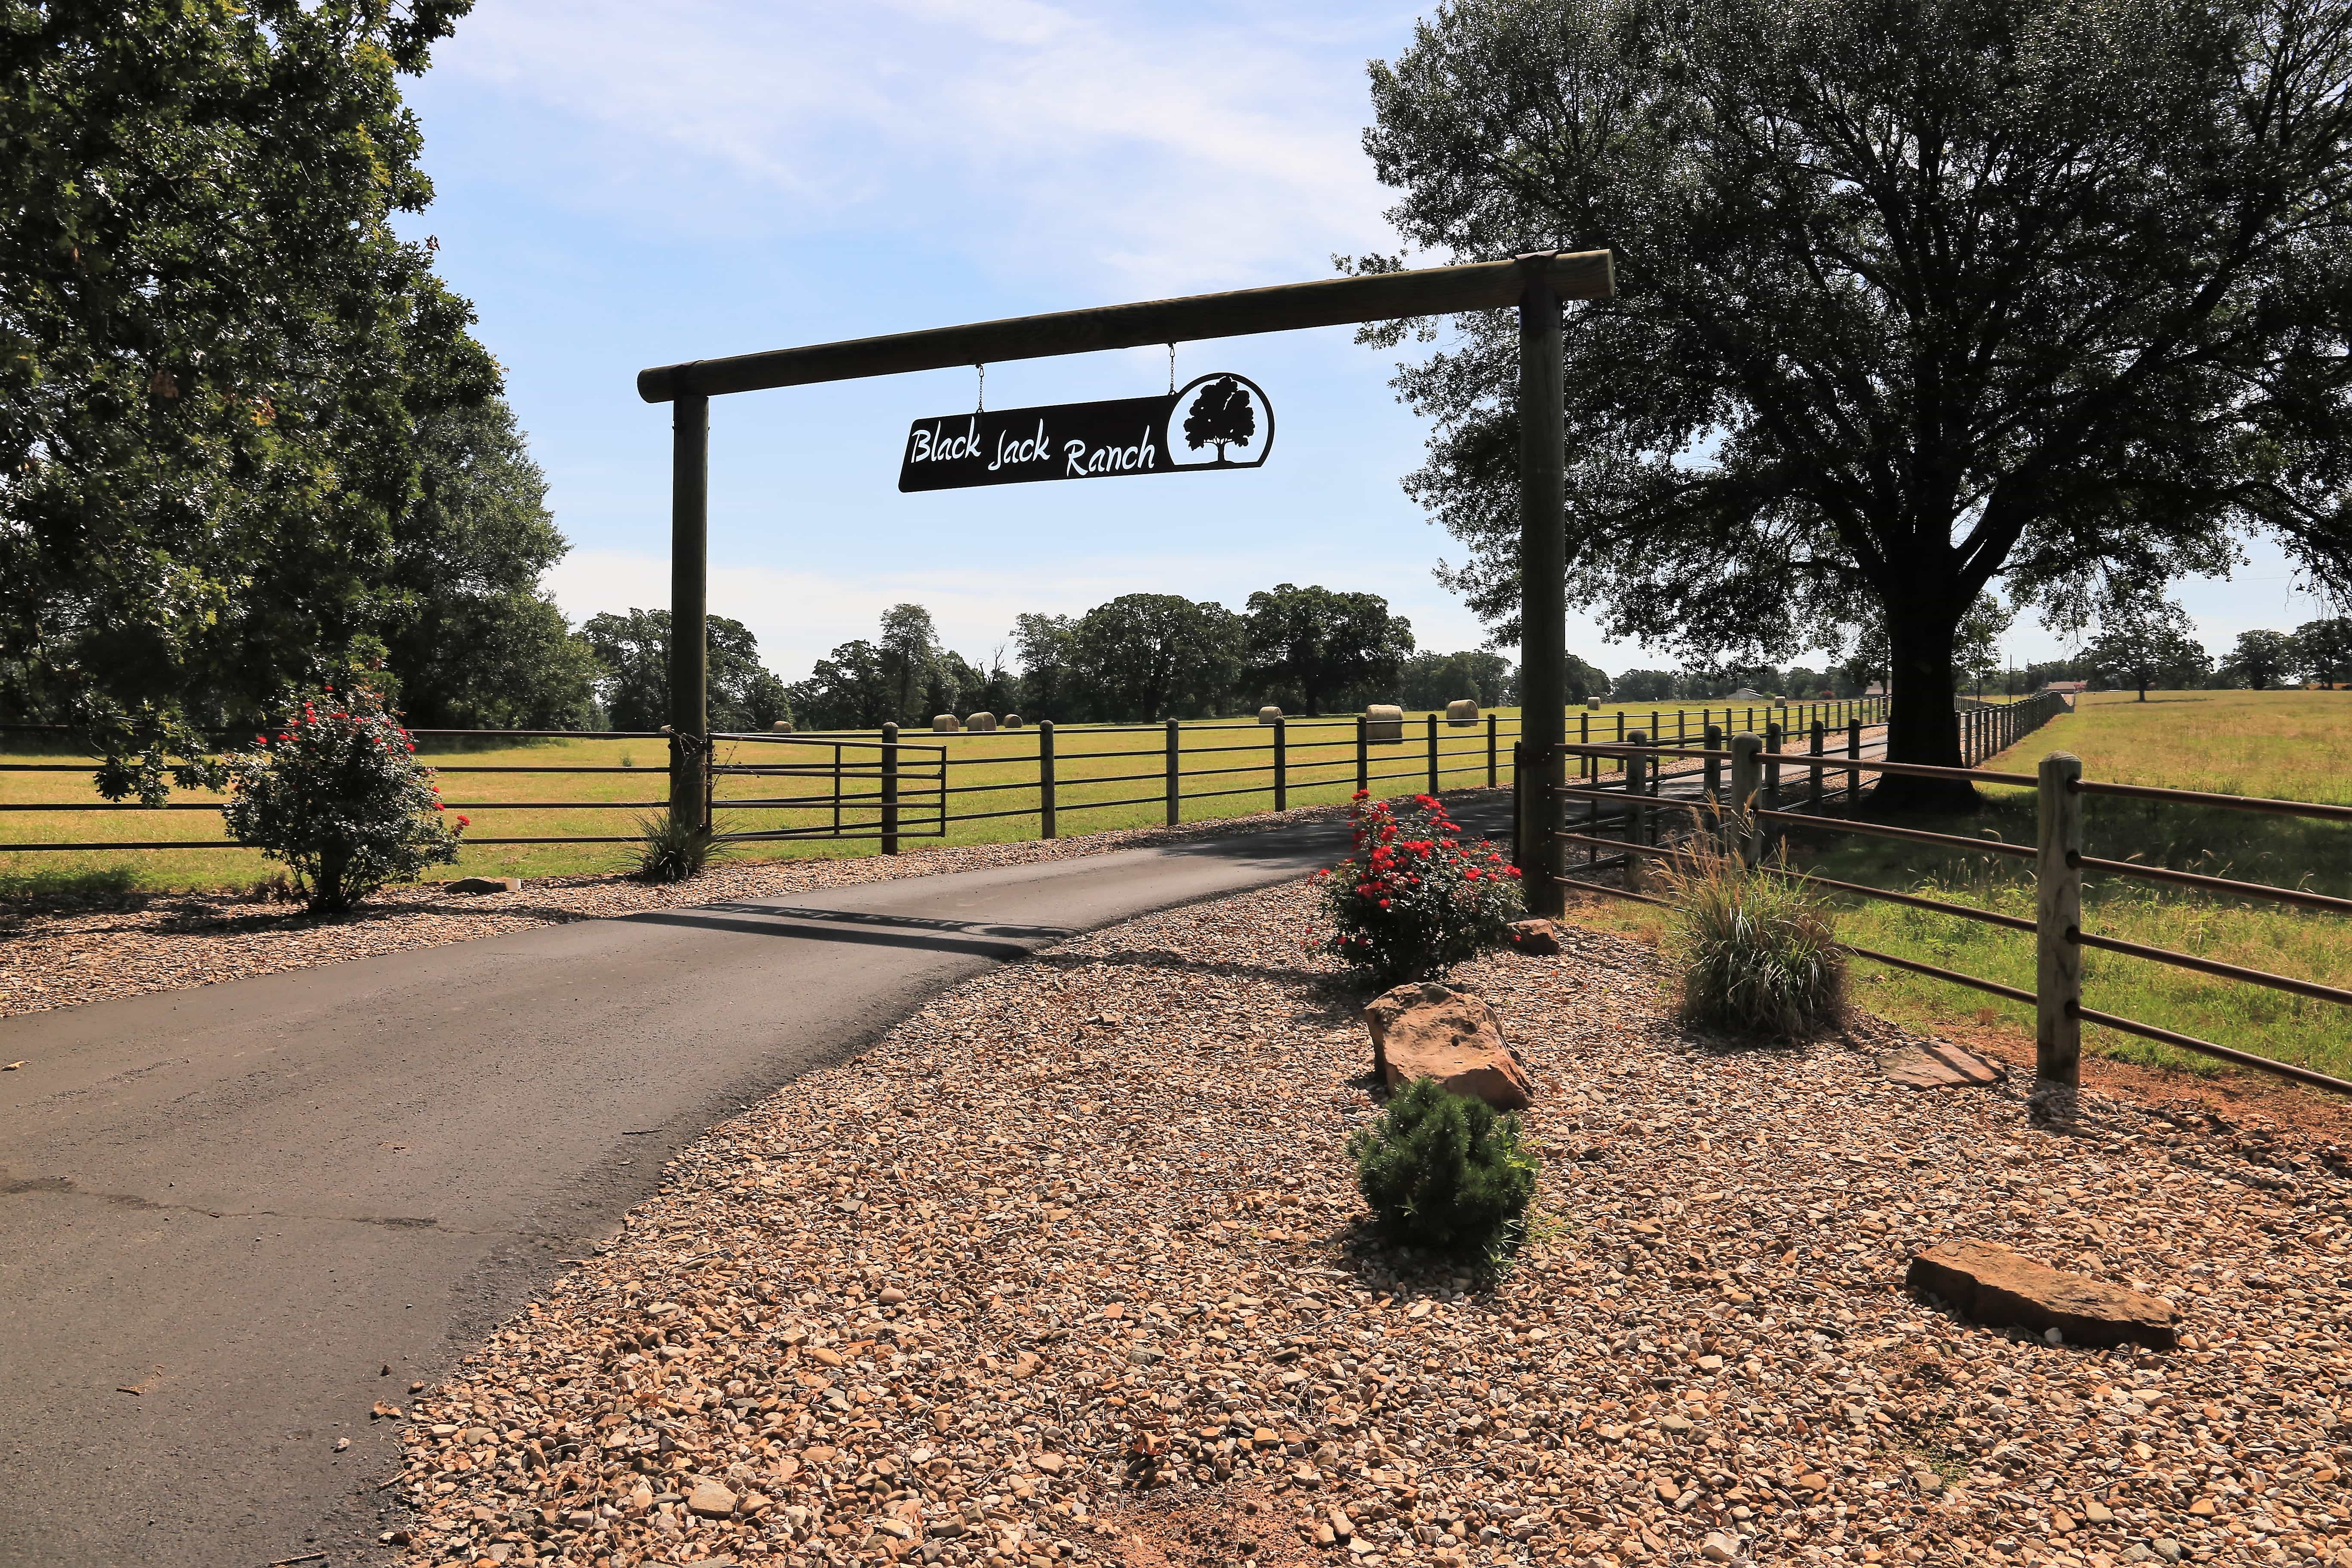 Northeast Oklahoma land for sale, Black Jack Ranch, farm land for sale